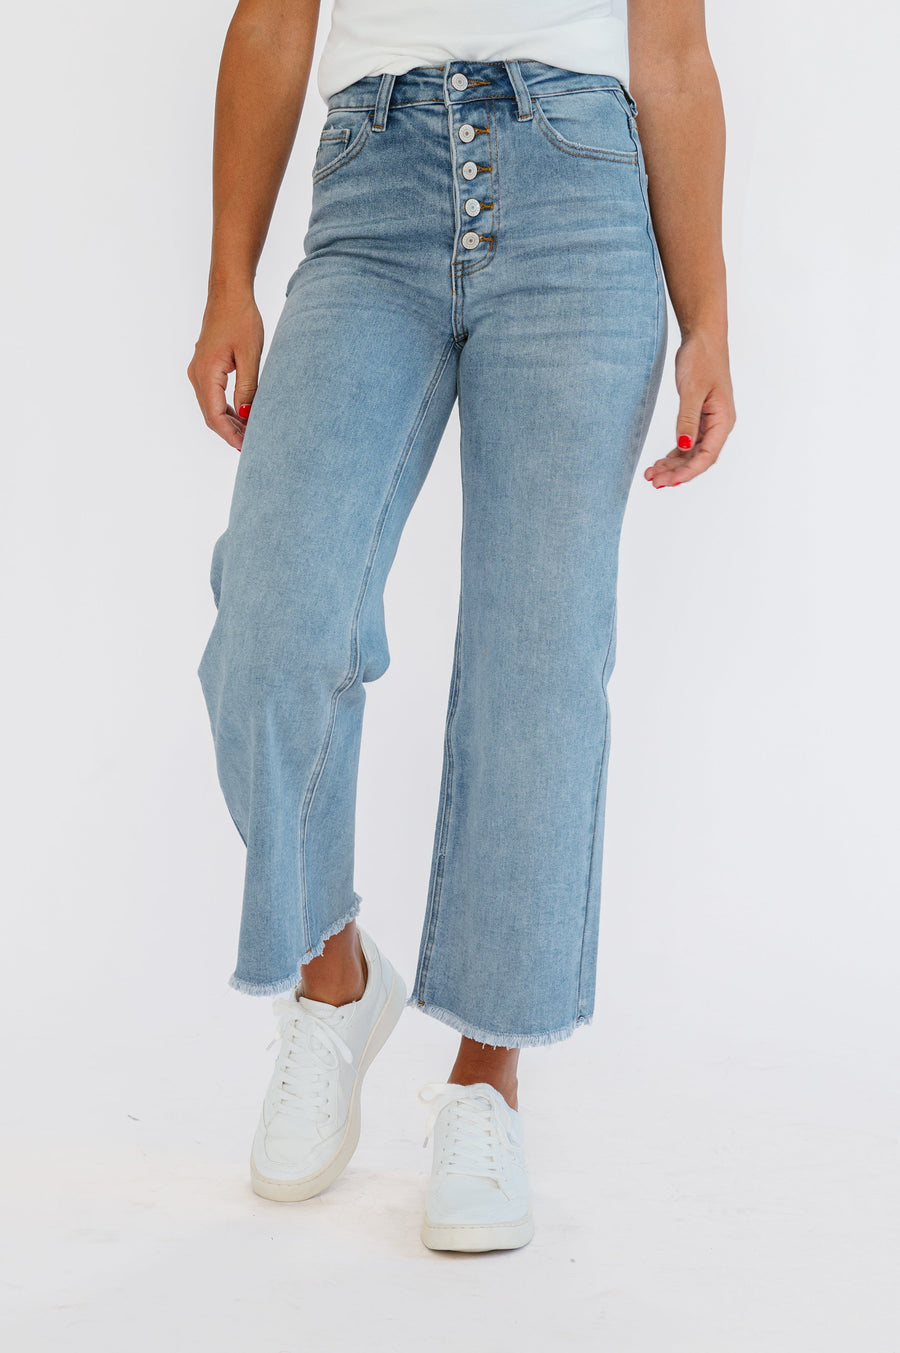 Fehrnvi light denim jeans with cropped length